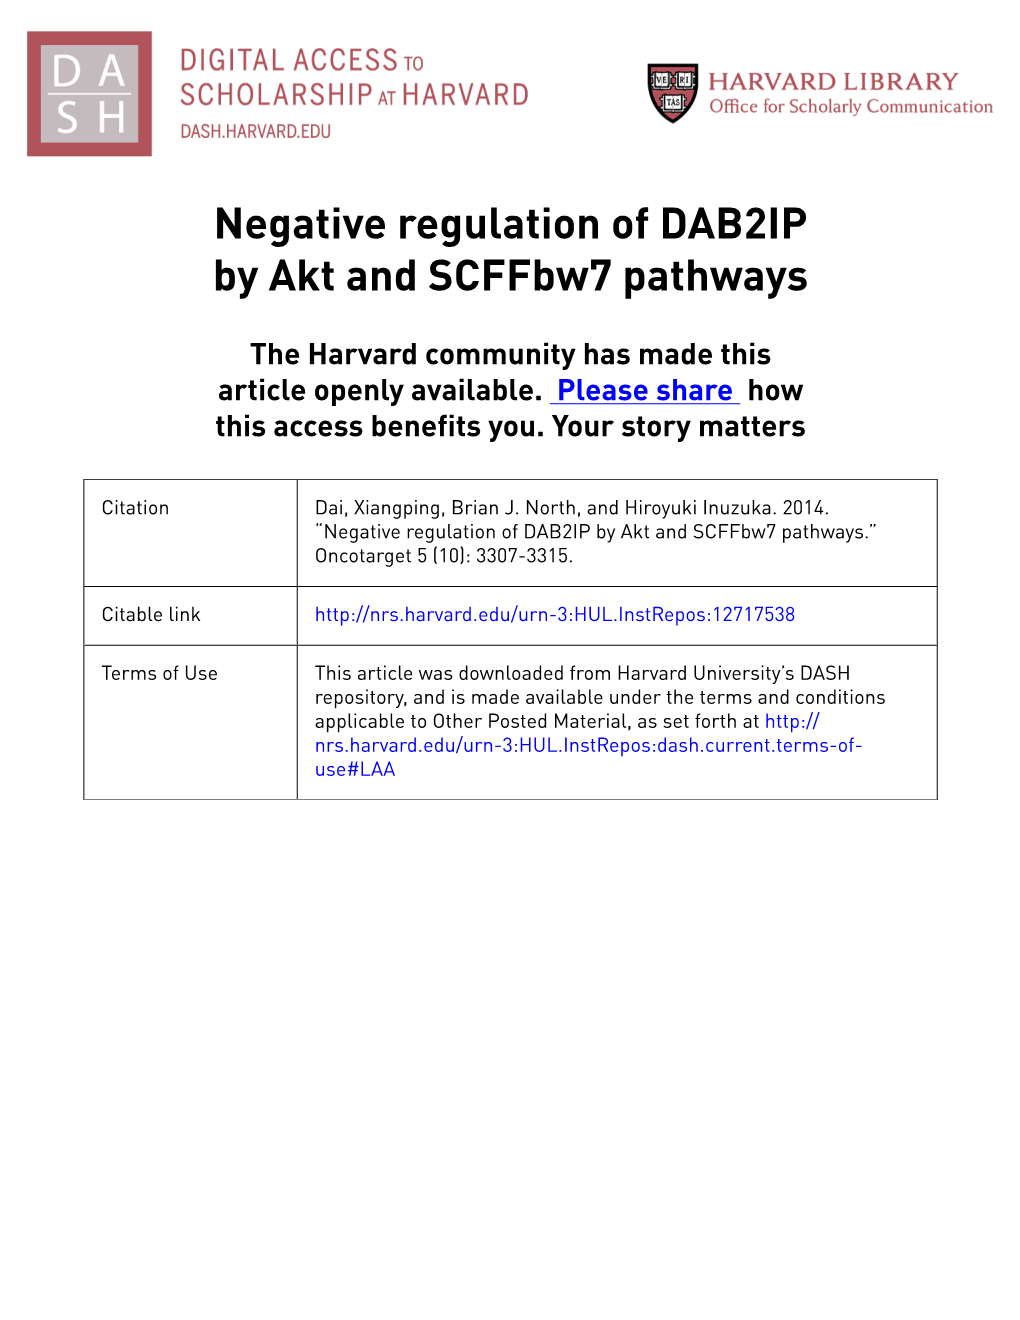 Negative Regulation of DAB2IP by Akt and Scffbw7 Pathways